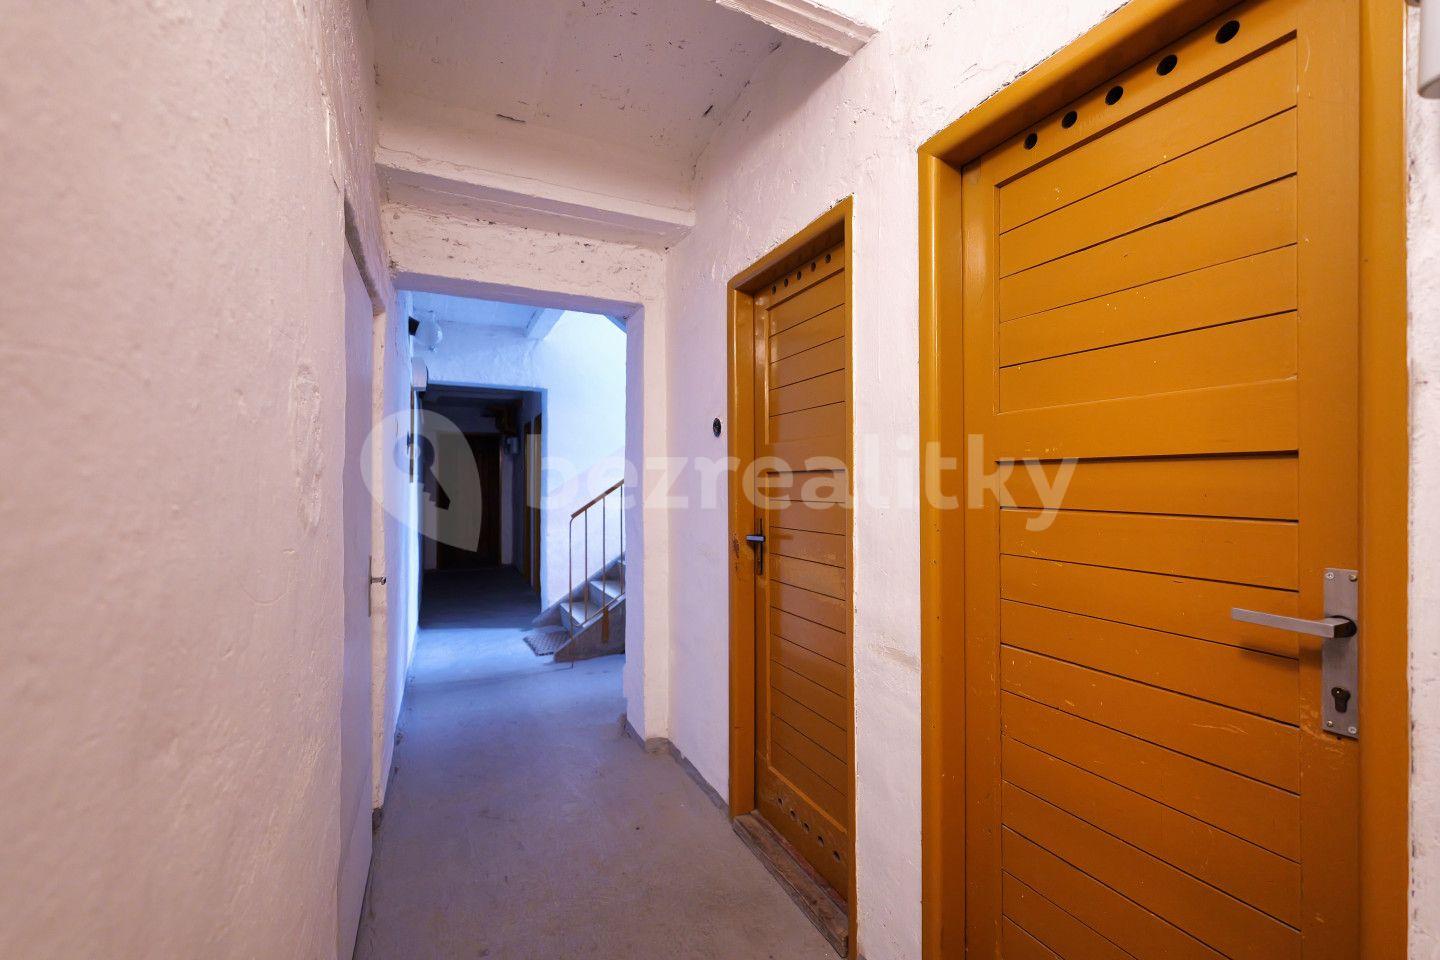 Predaj bytu 2-izbový 67 m², Ulička, Kroměříž, Zlínský kraj